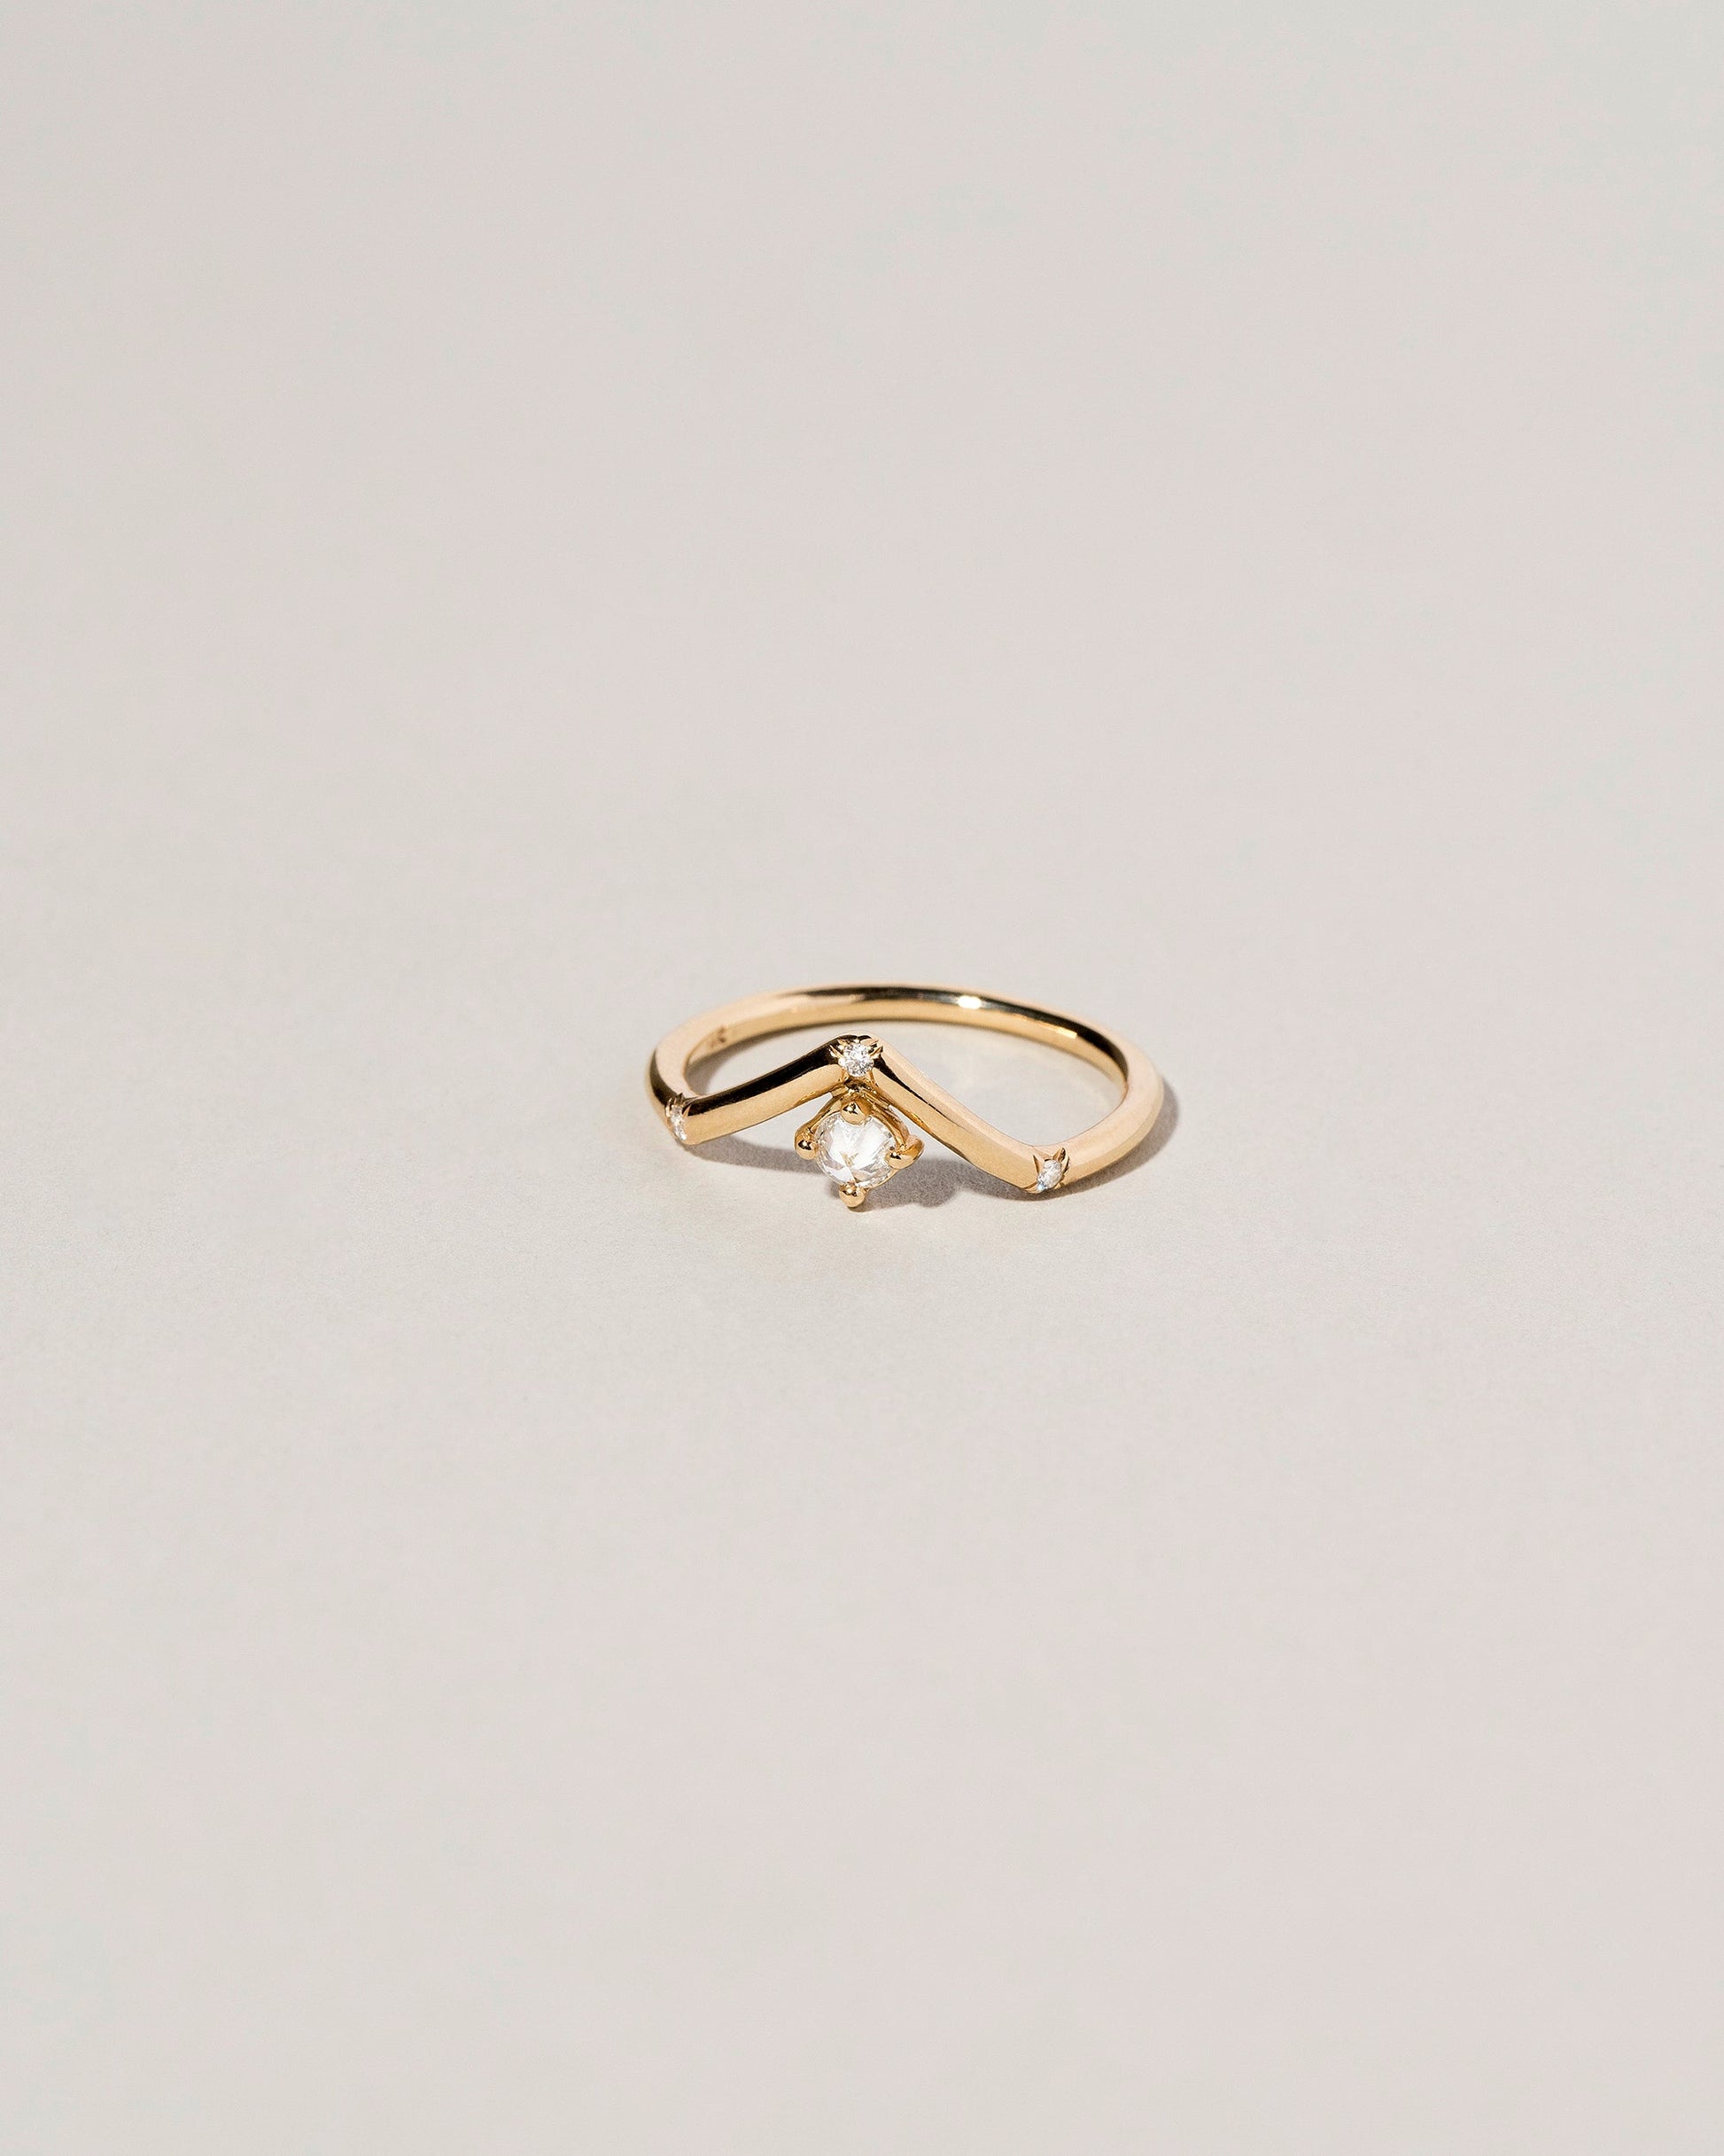  Mini Peak Ring on light color background.